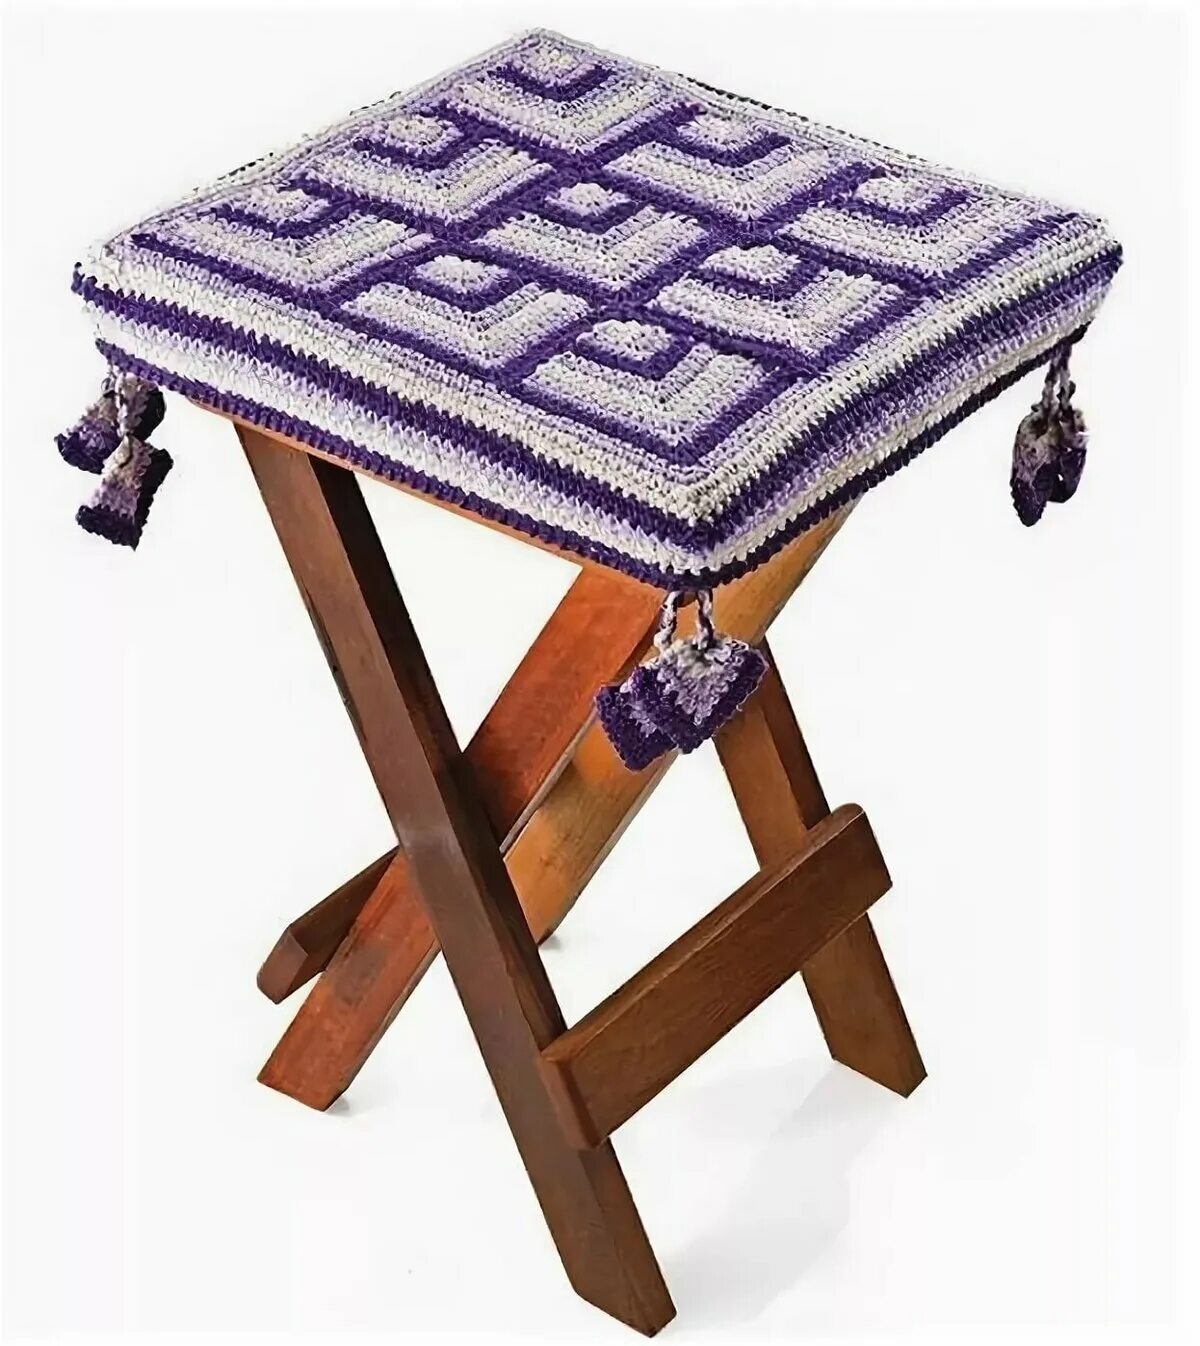 Сидушка-чехол на табуретку квадратная крючком-Square Crochet Seat Cover on a Stool. Сидушка на стул крючком. Вязаные накидки на табурет. Вязаная сидушка на стул. Накидки на табуретки крючком